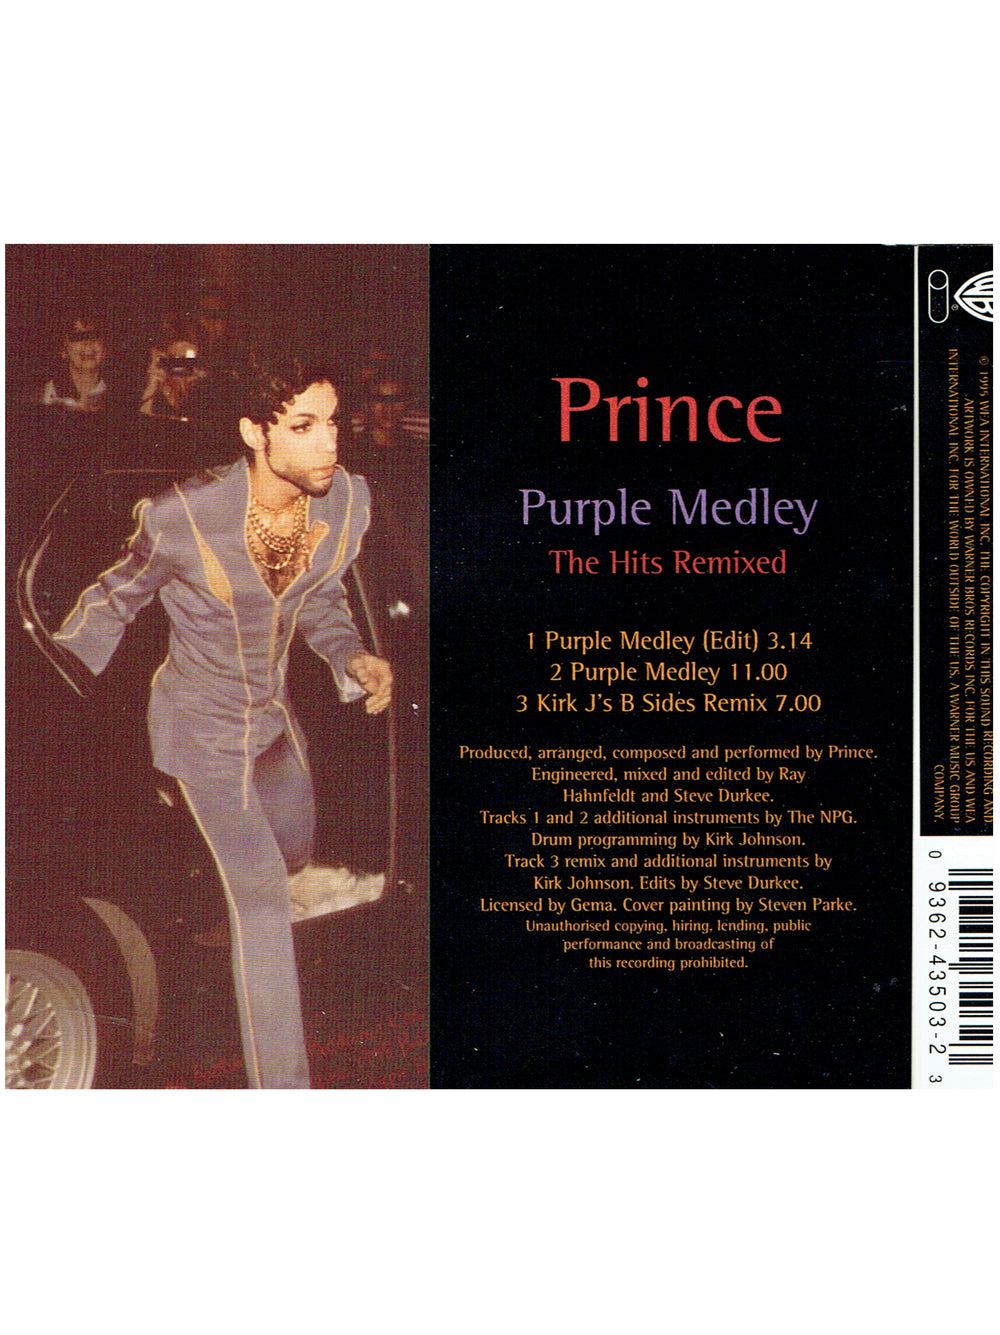 Prince – Purple Medley CD Single Europe Preloved: 1995